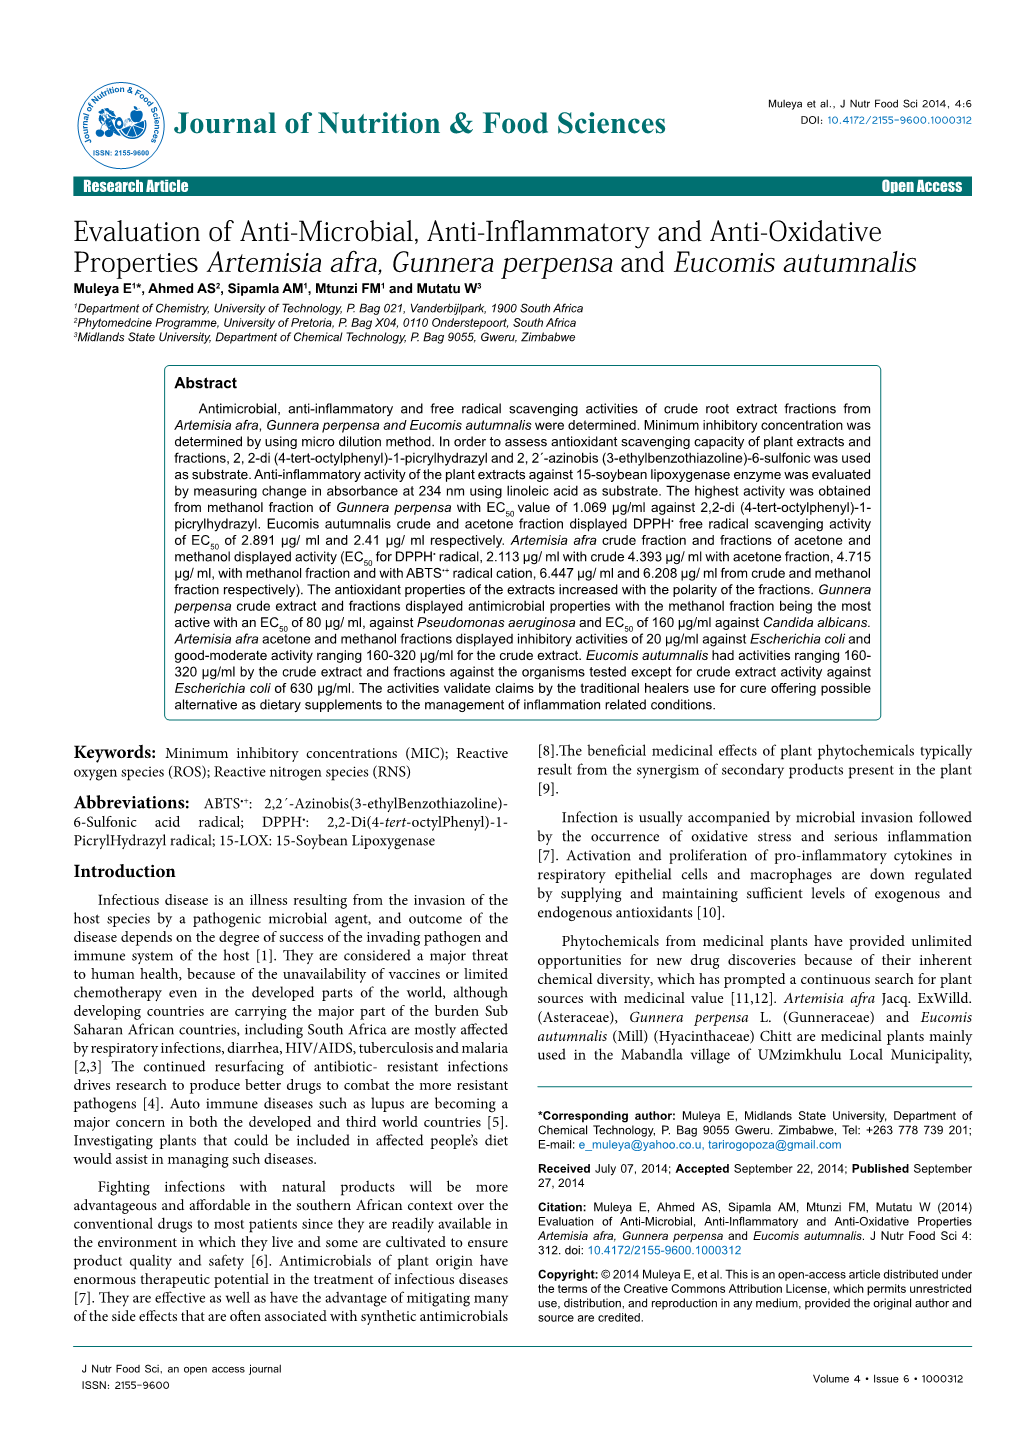 Evaluation of Anti-Microbial, Anti-Inflammatory and Anti